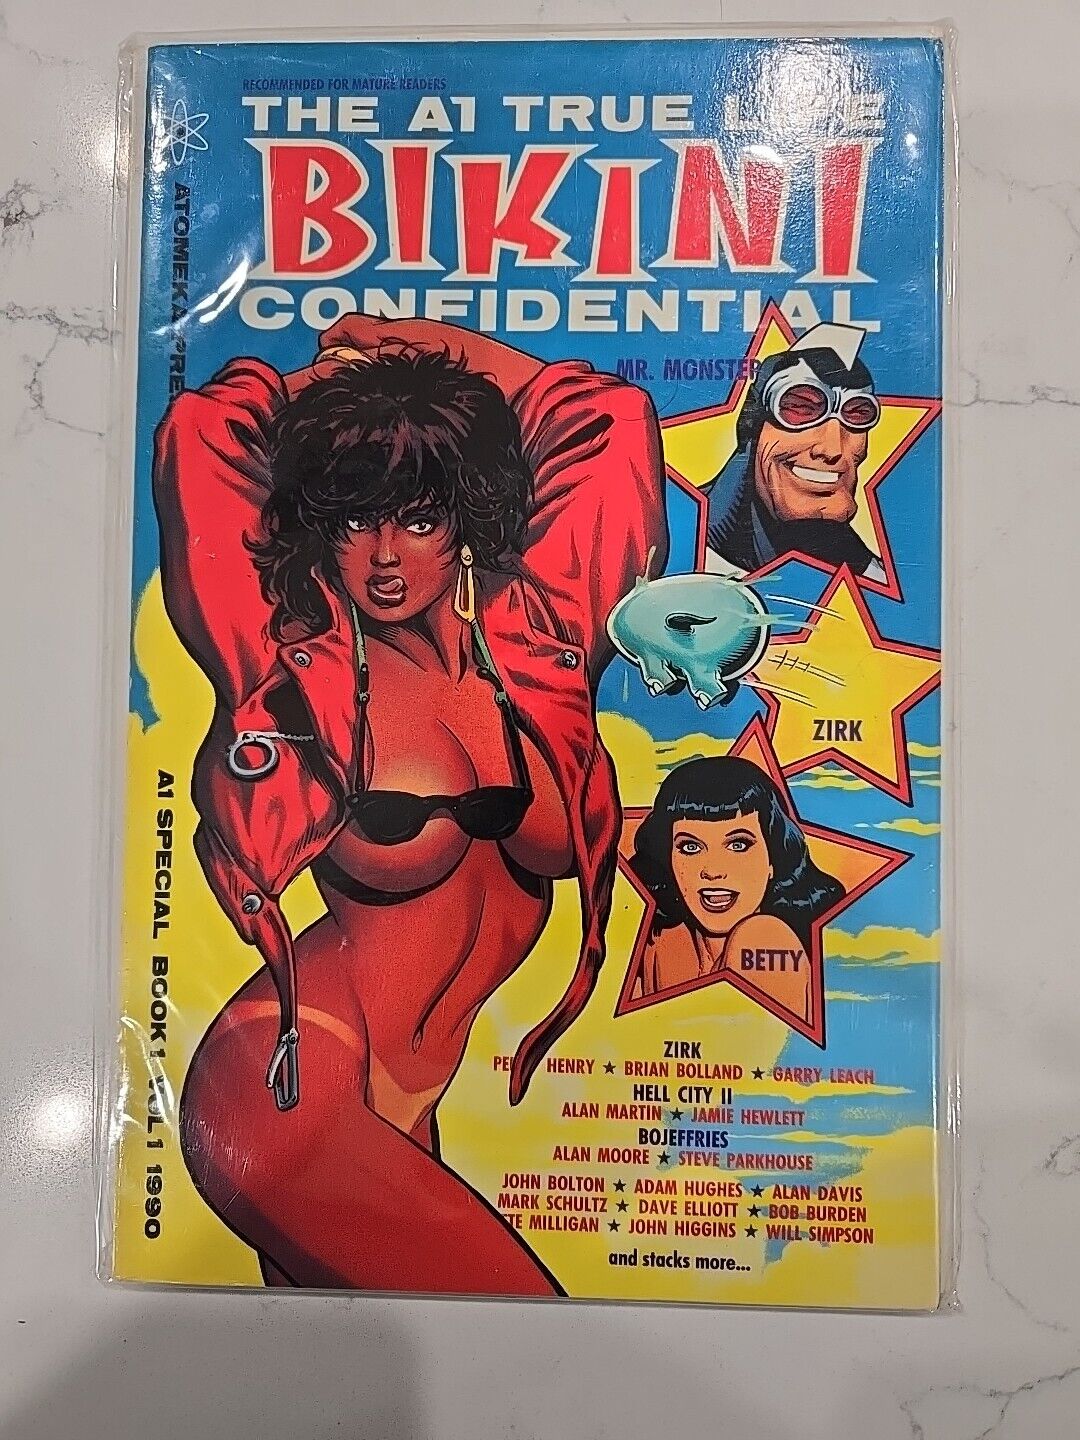 A1 True Life Bikini Confidential #1 (Atomeka Press 1990)